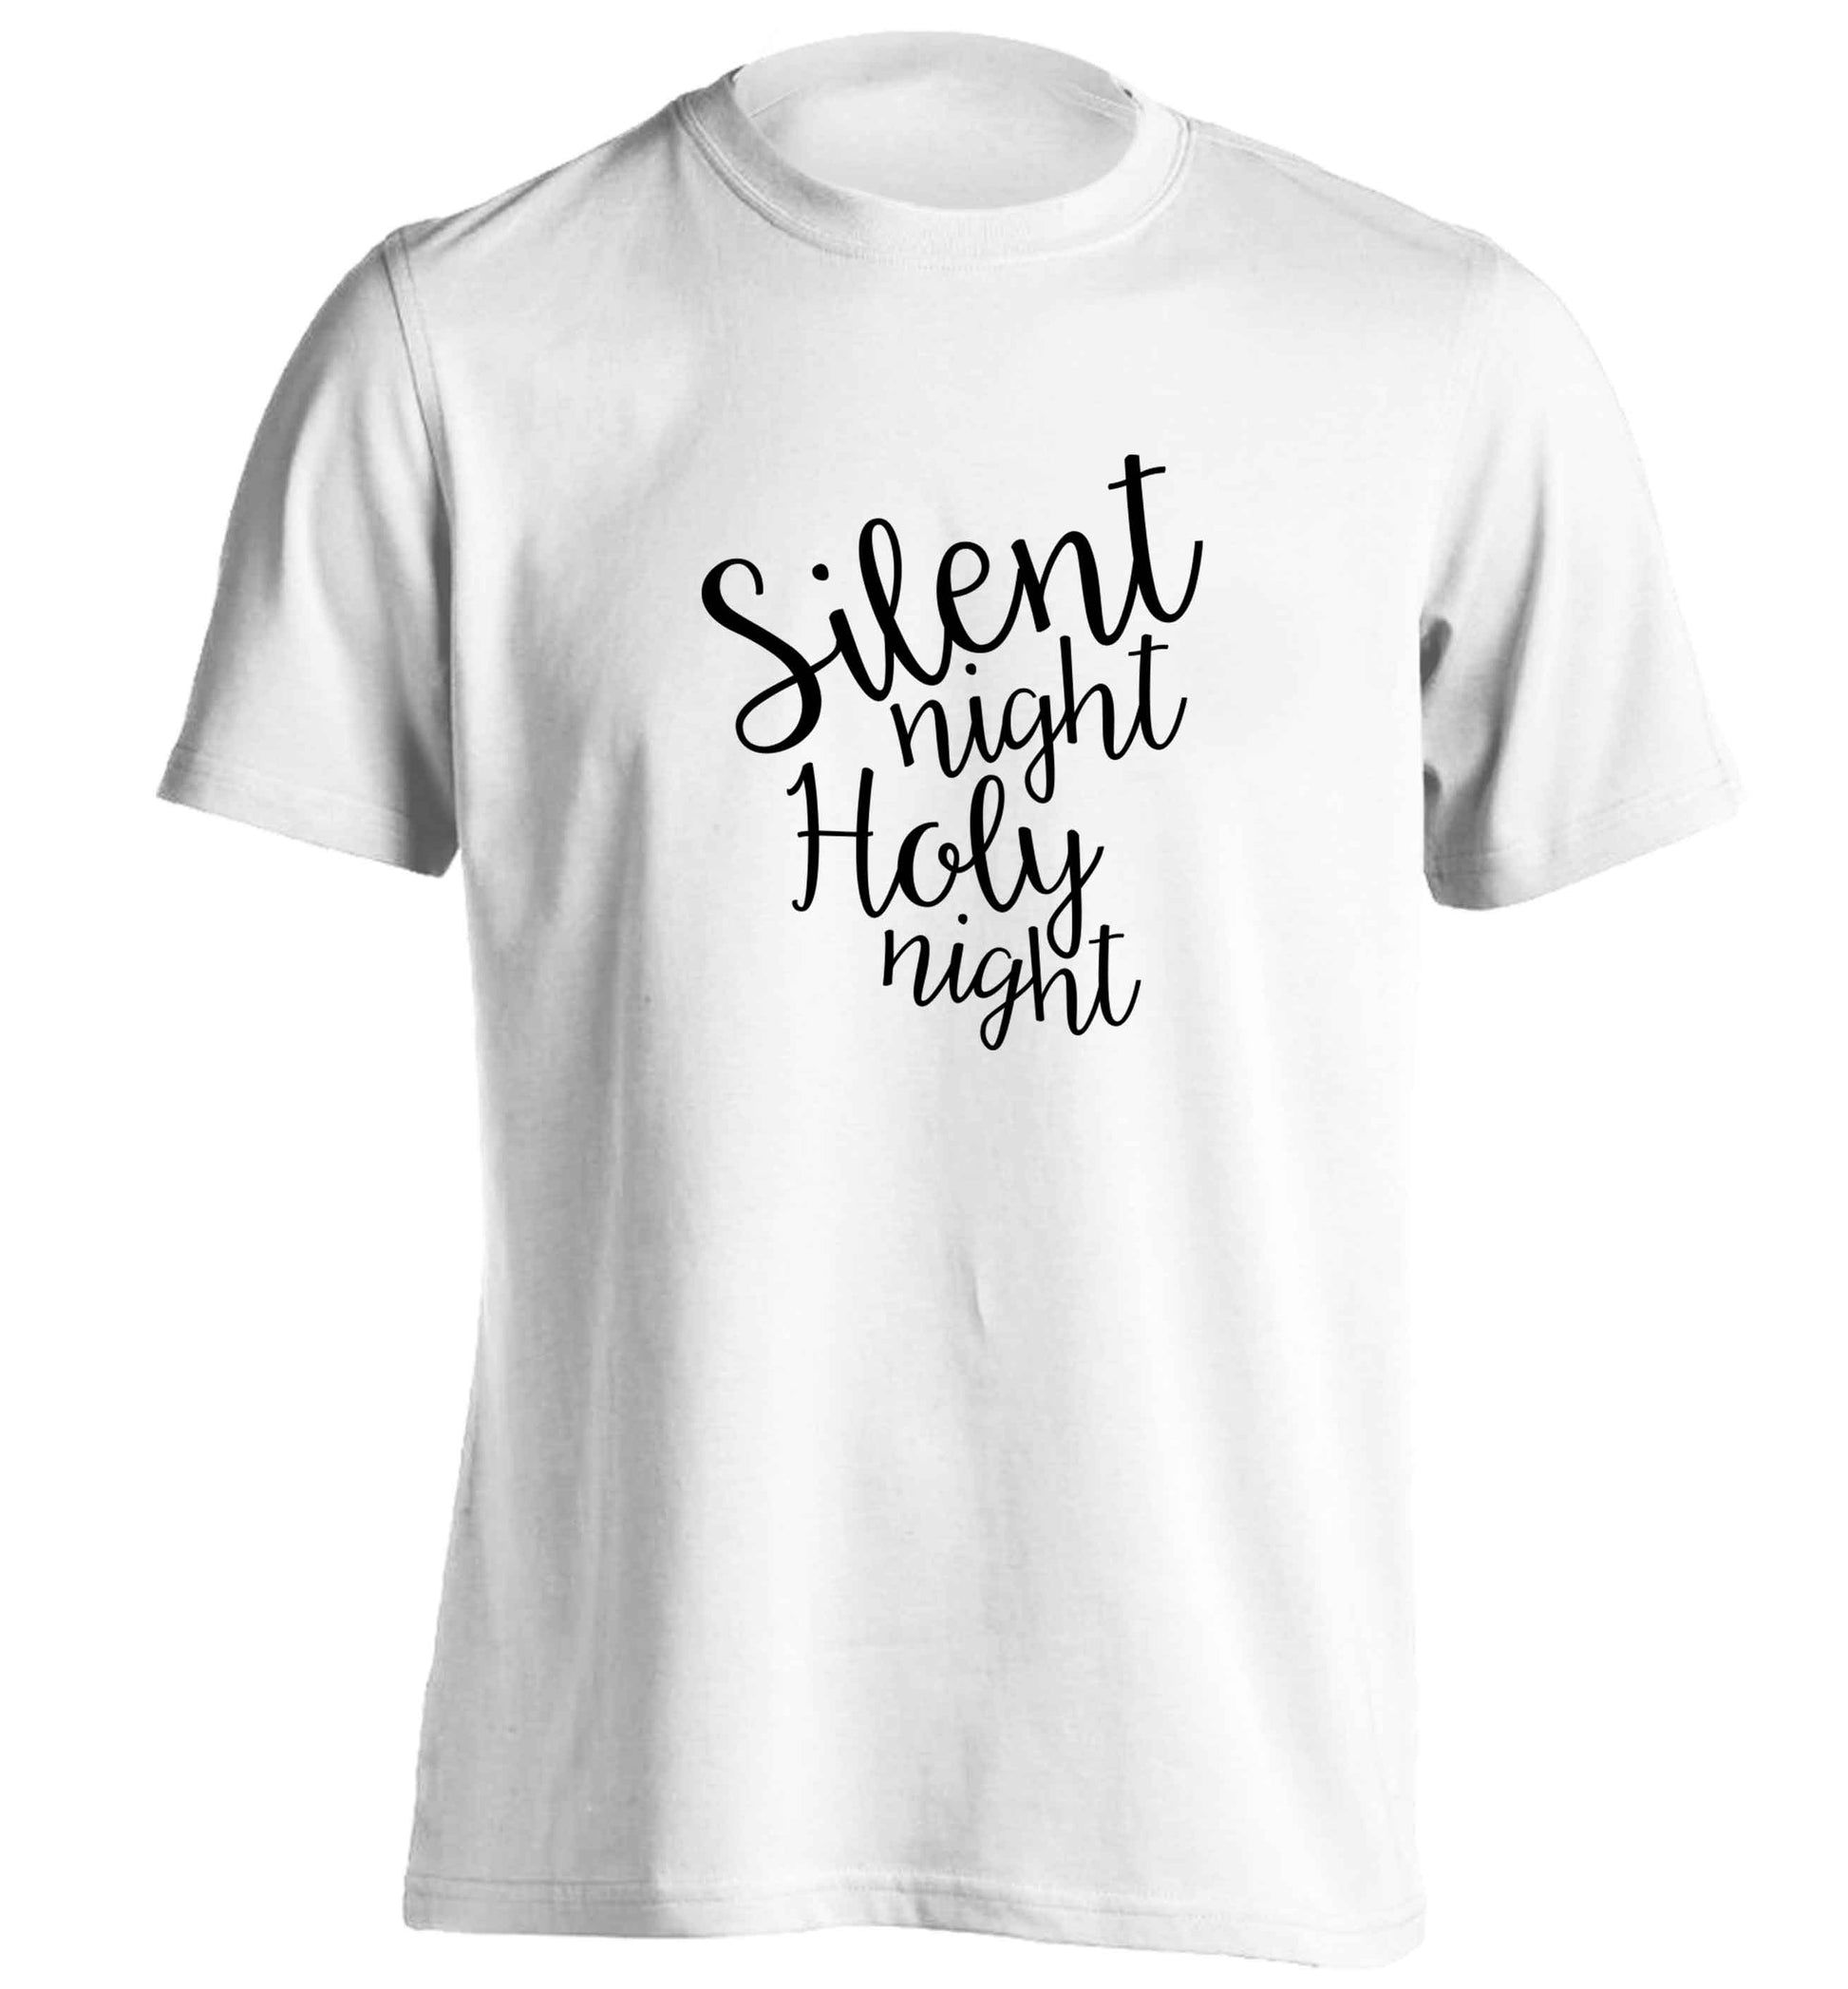 Silent night holy night adults unisex white Tshirt 2XL